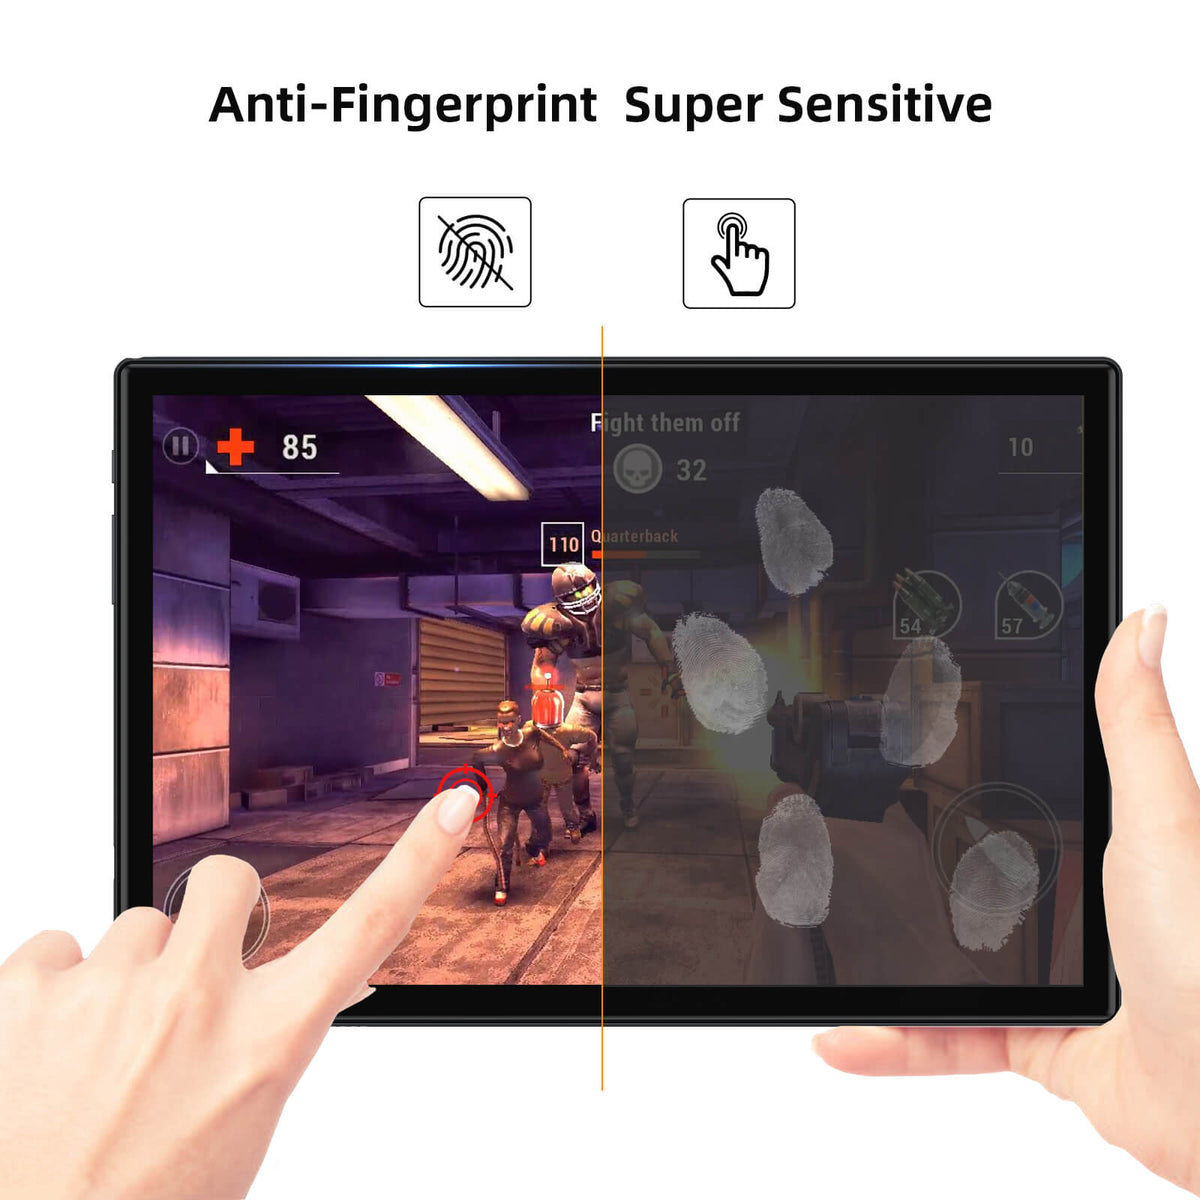 Kingpad Z10 Tablet Tempered Glass Screen Protector - Vastking